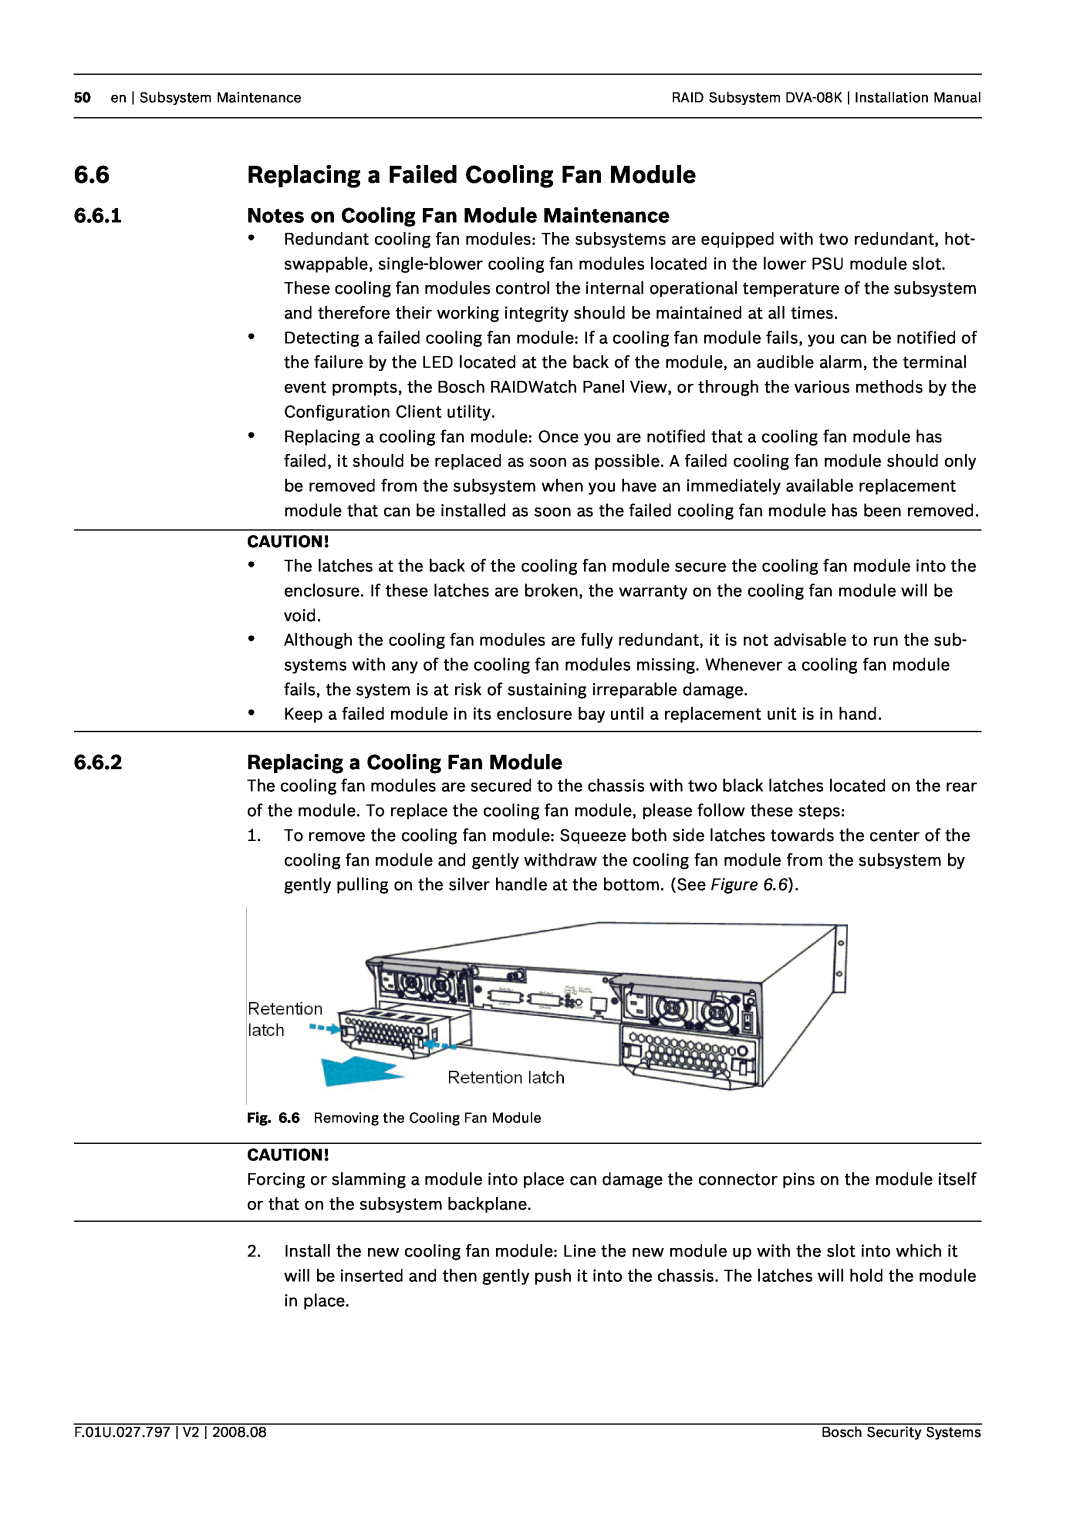 Bosch Appliances DVA-08K manual Replacing a Failed Cooling Fan Module, 6.6.1, Notes on Cooling Fan Module Maintenance 